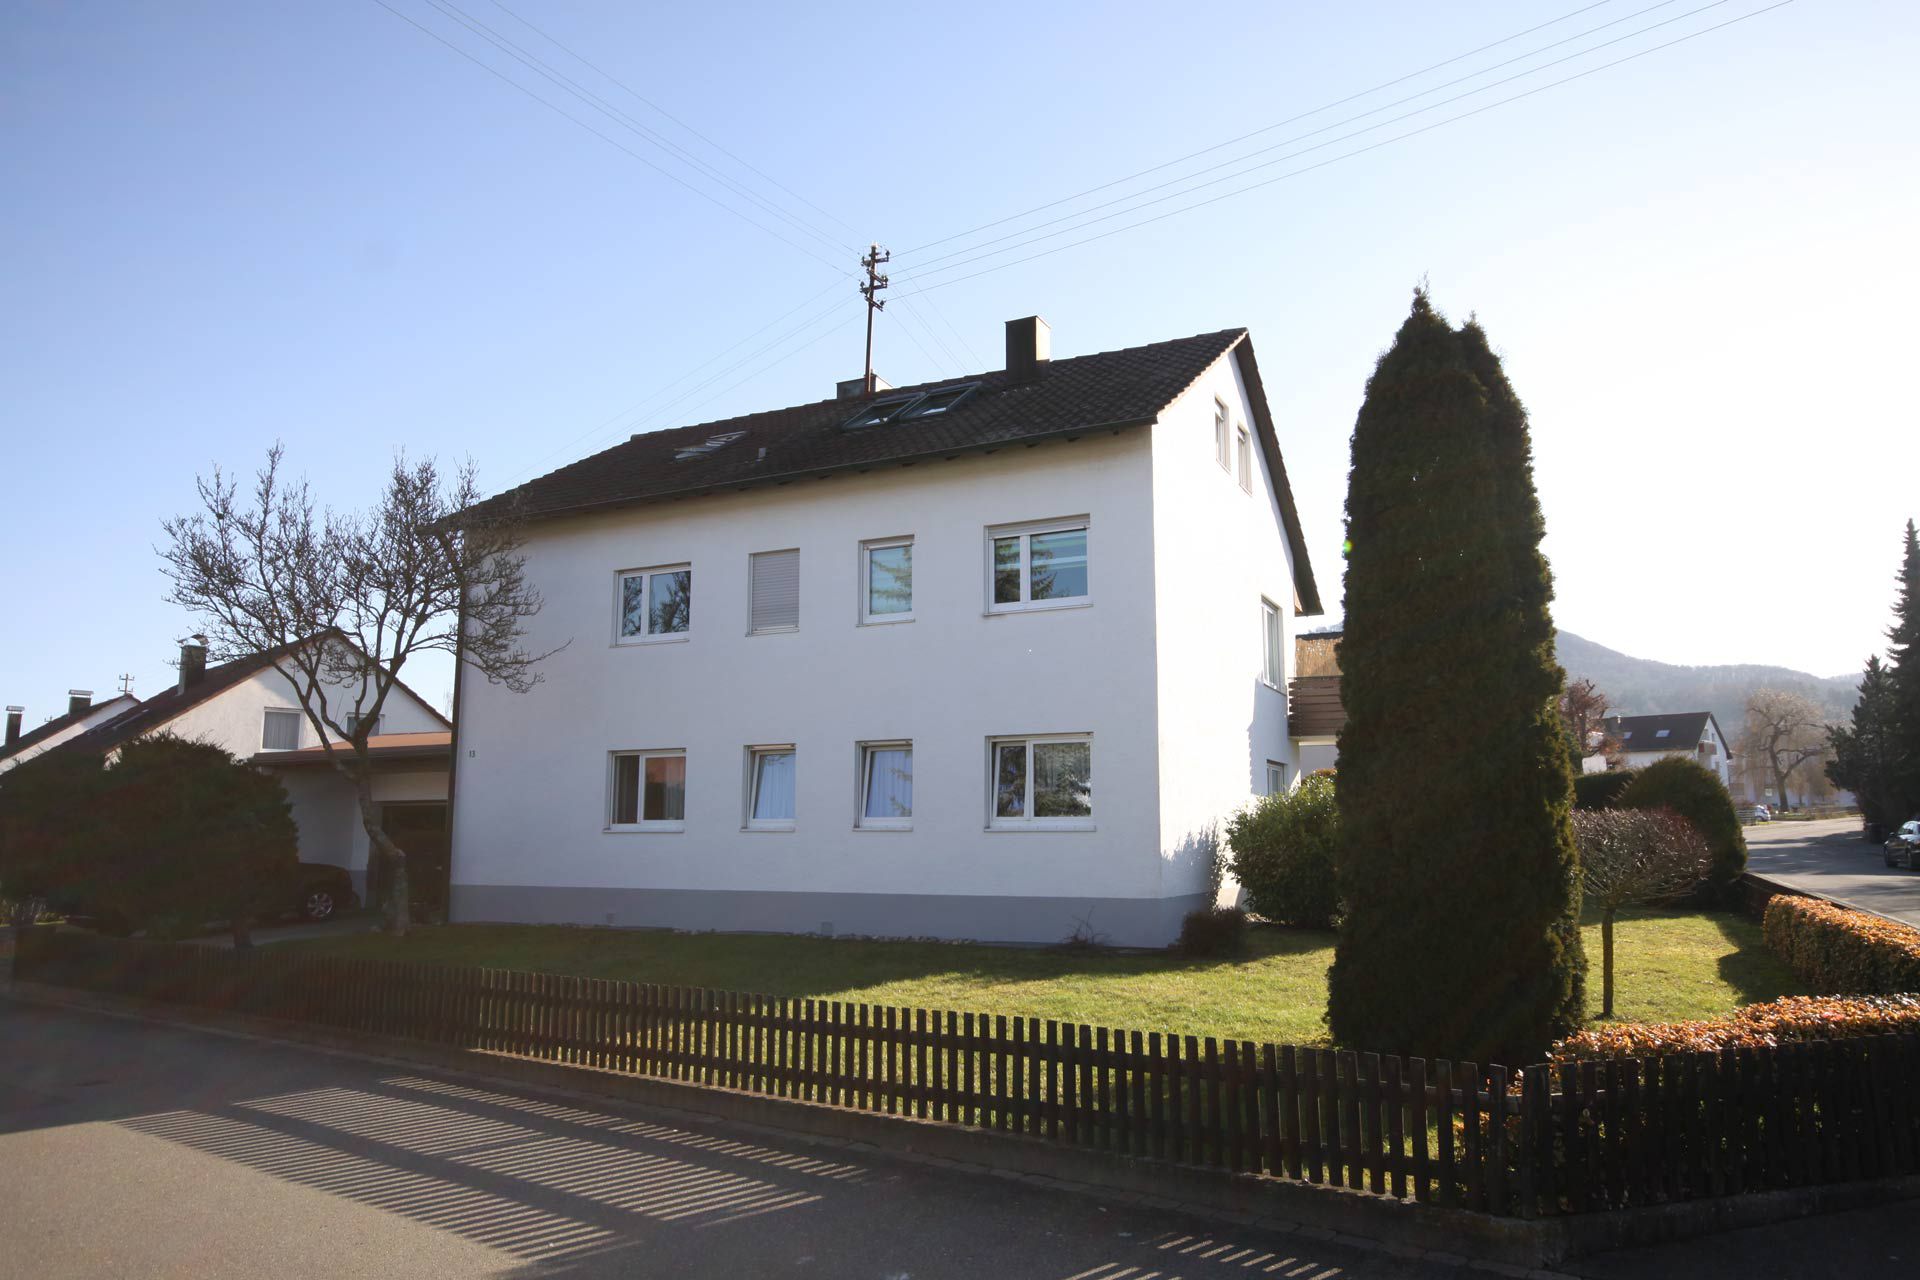 3-Familienhaus Mössingen